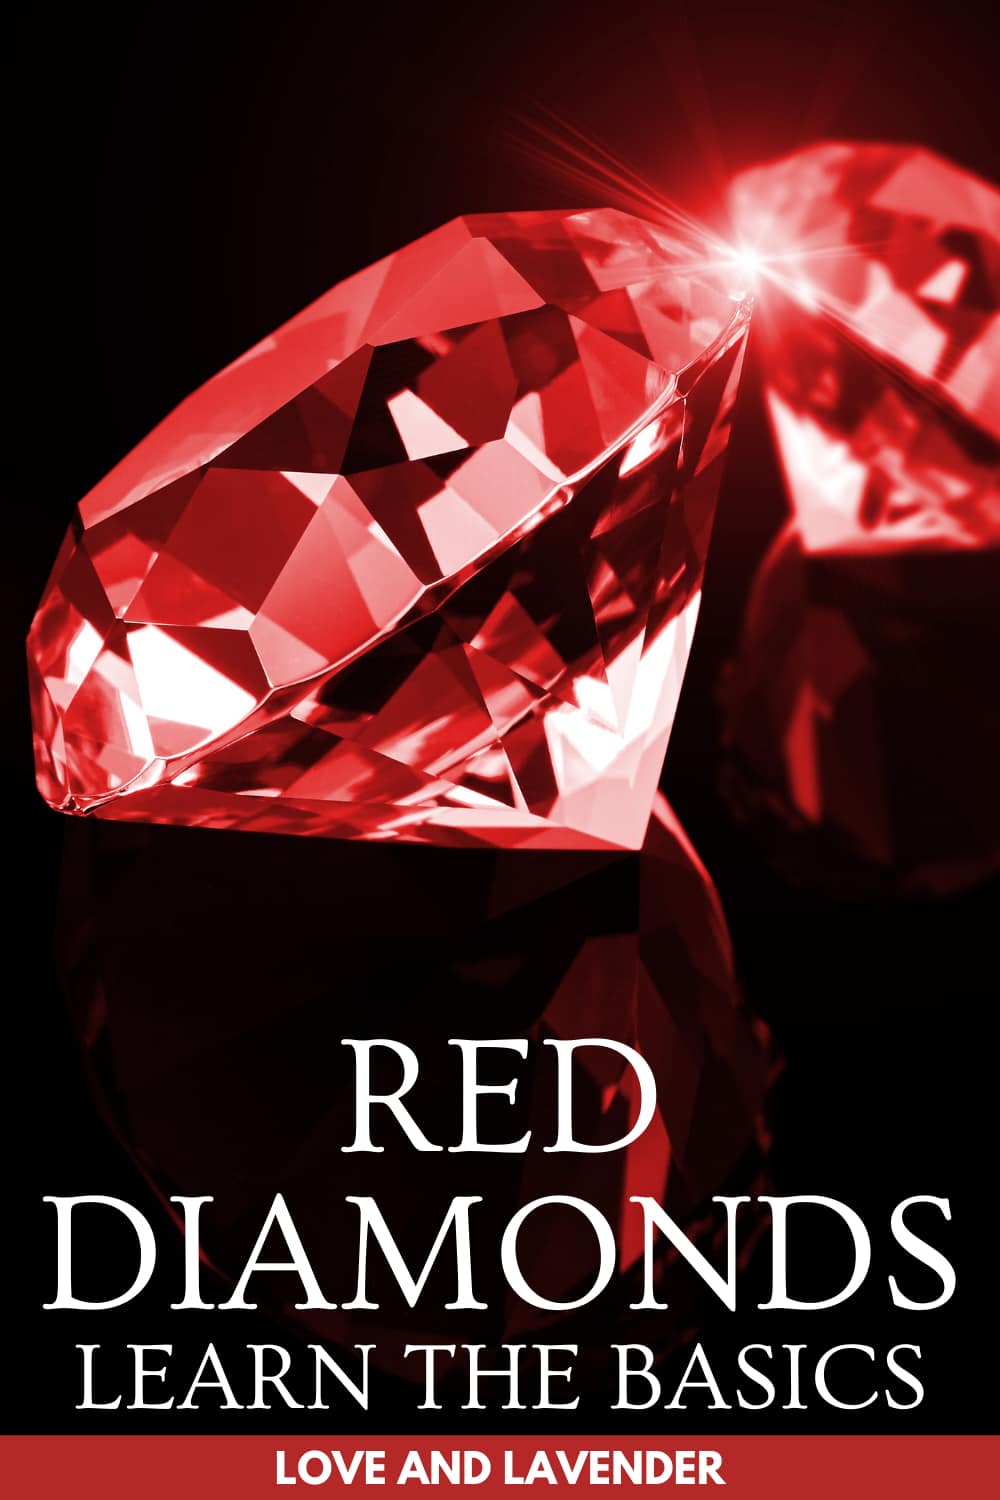 Red Diamonds - Pinterest pin